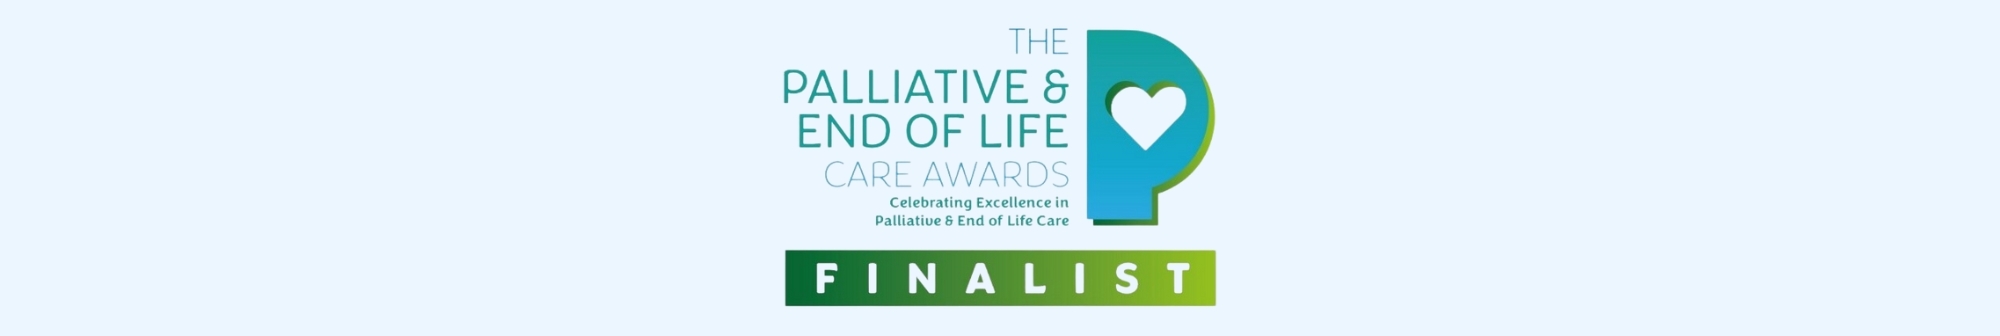 palliative-end-of-life-care-awards-logo